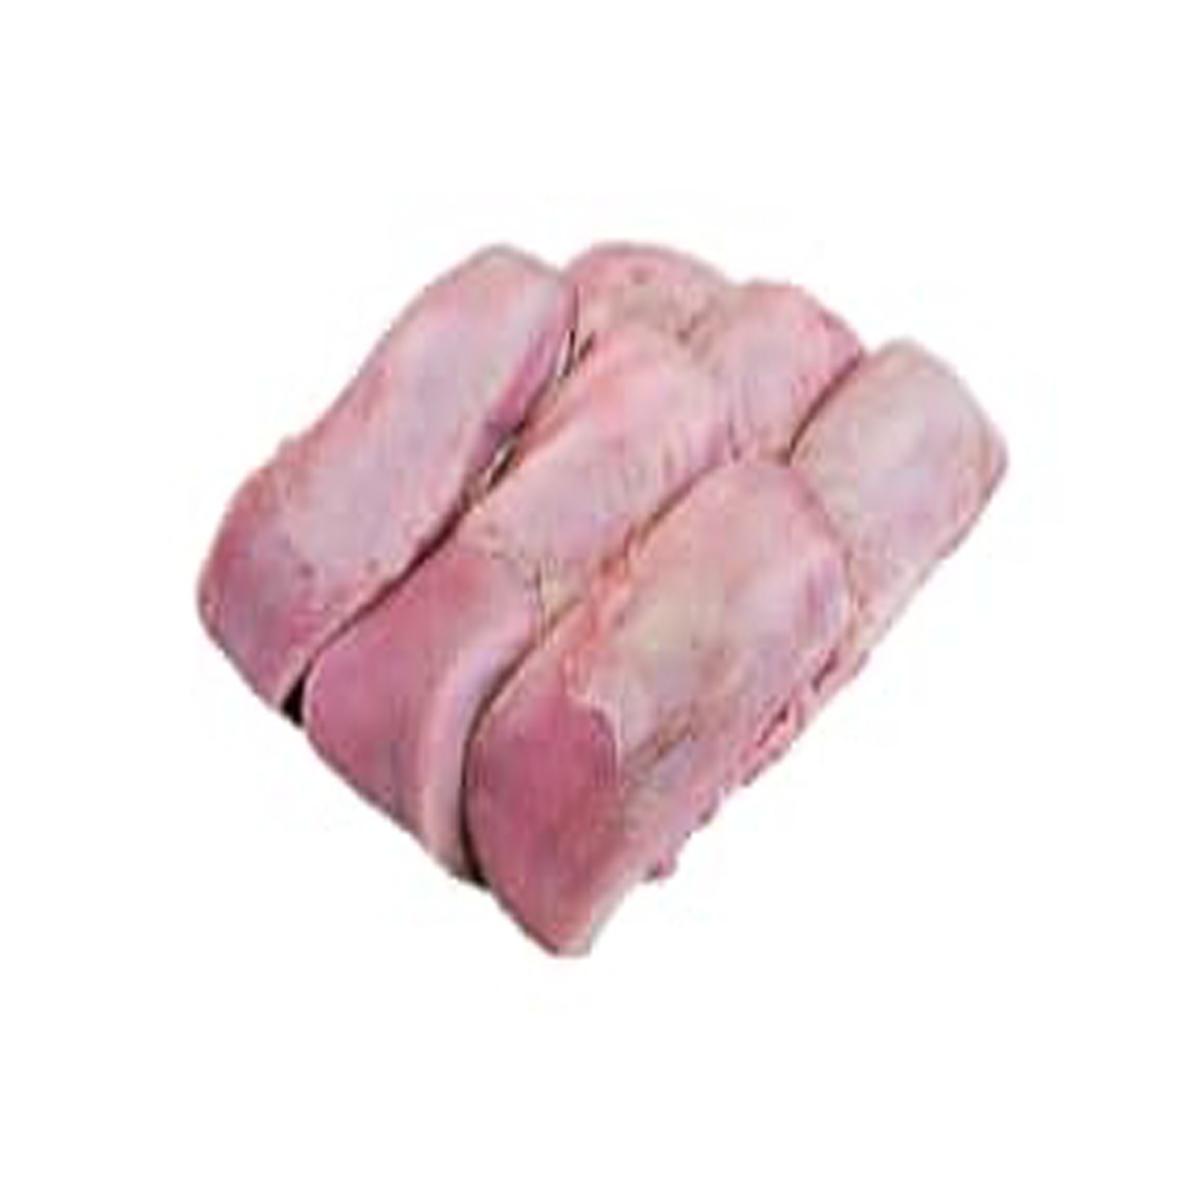 Lengua de cerdo (1 kg / 2.2 lb)